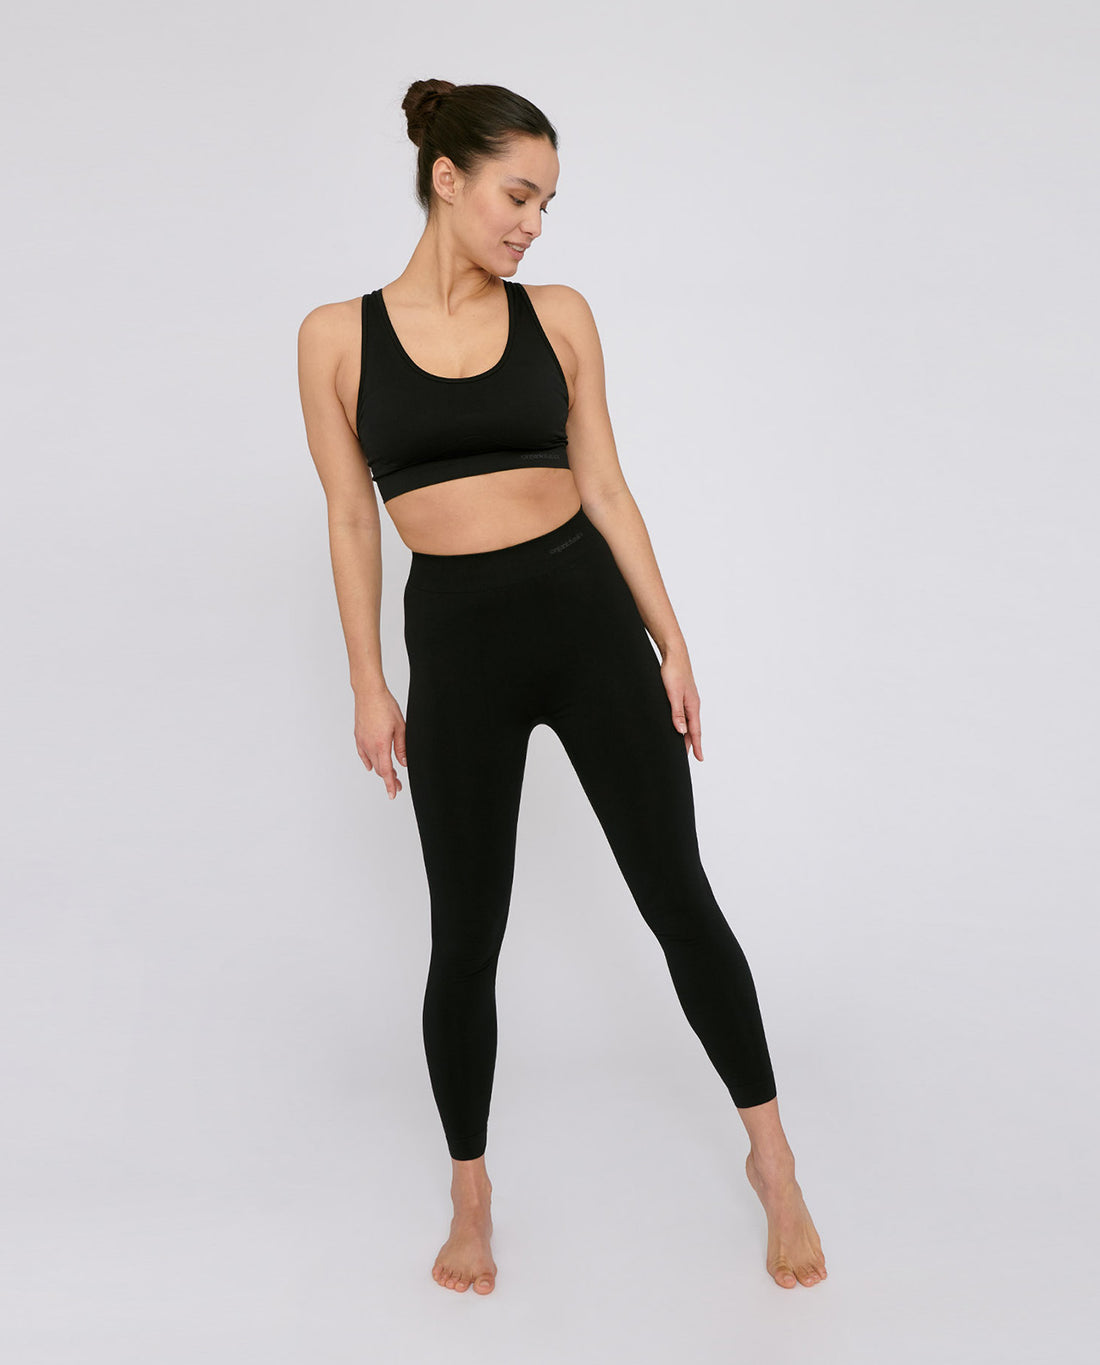 marché commun organic basics legging femme sport yoga recyclé noir